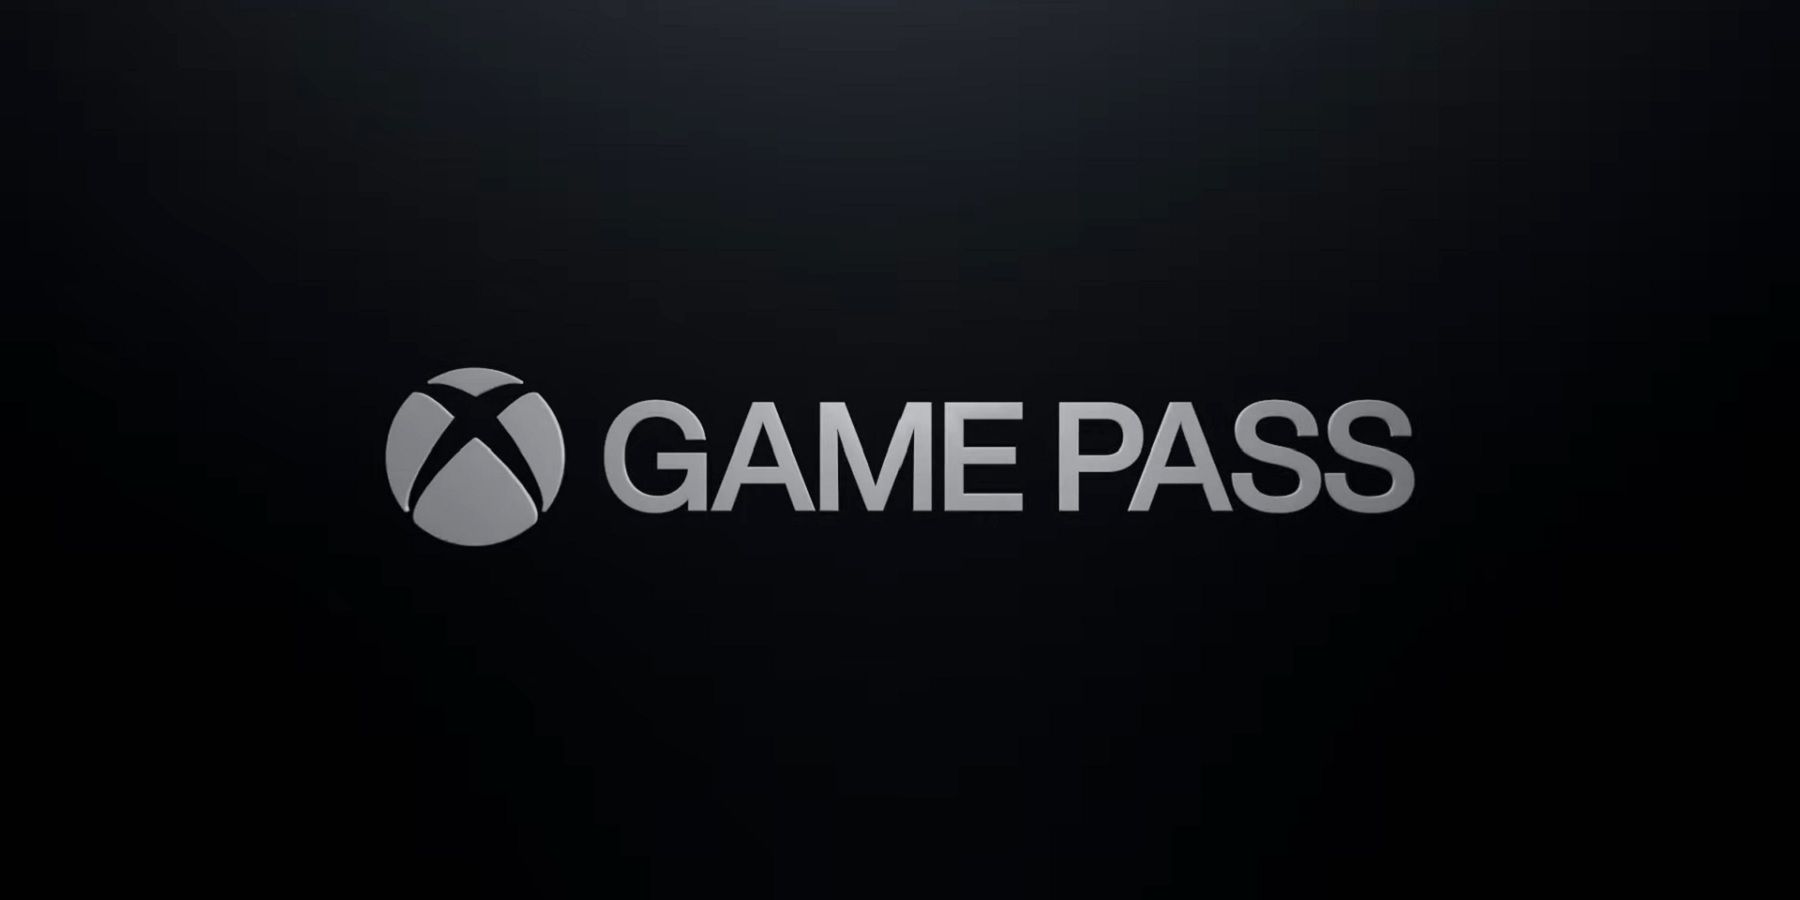 xbox game pass black and white logo